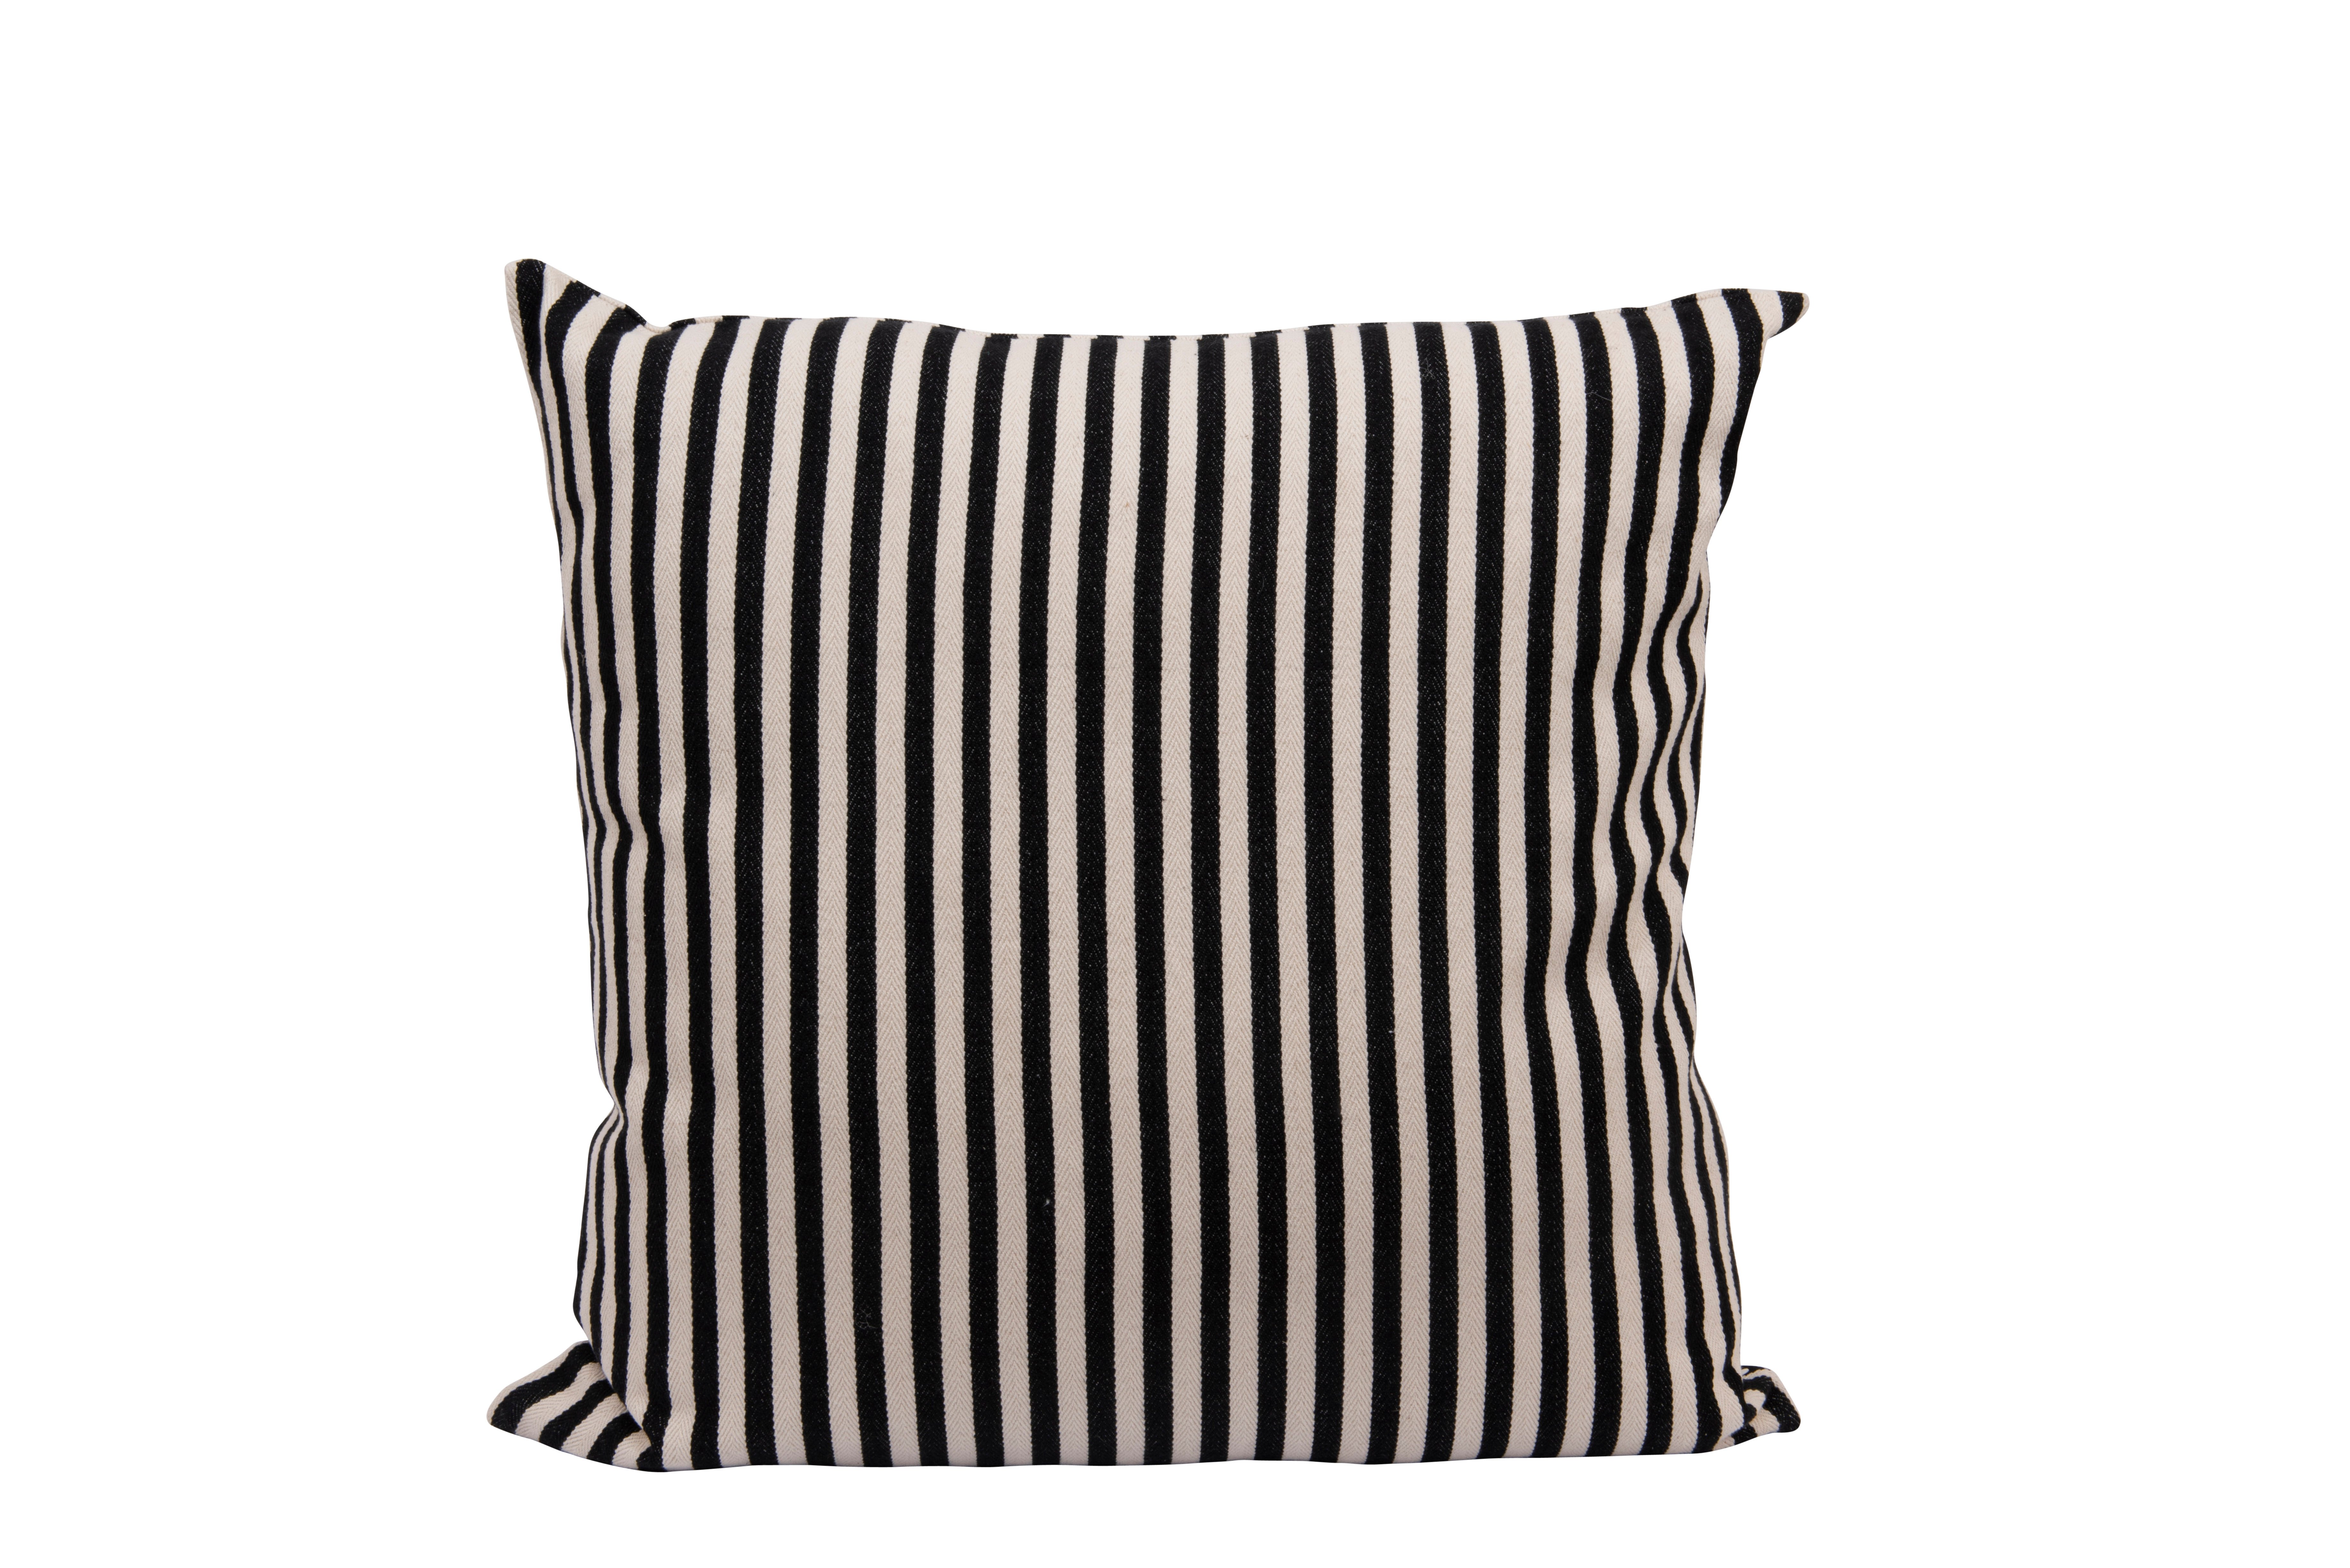 Square Cotton Woven Pillow with Black & Cream Stripes - Image 0